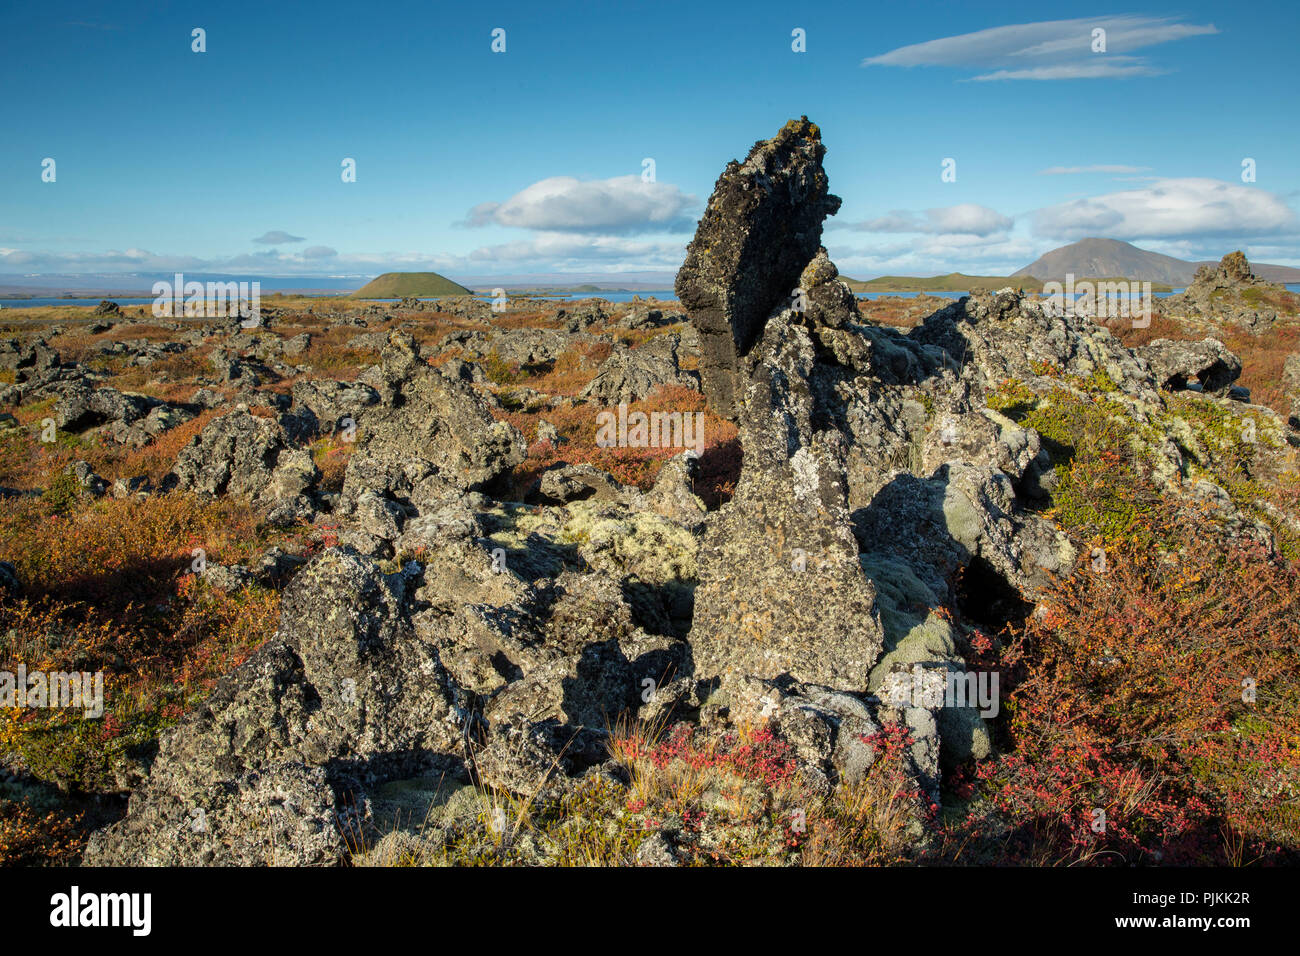 Iceland, Myvatn, lava rocks, Dimmuborgir lava field, Myvatn lake, pseudo crater, autumn leaves, cranberry foliage, blue sky Stock Photo